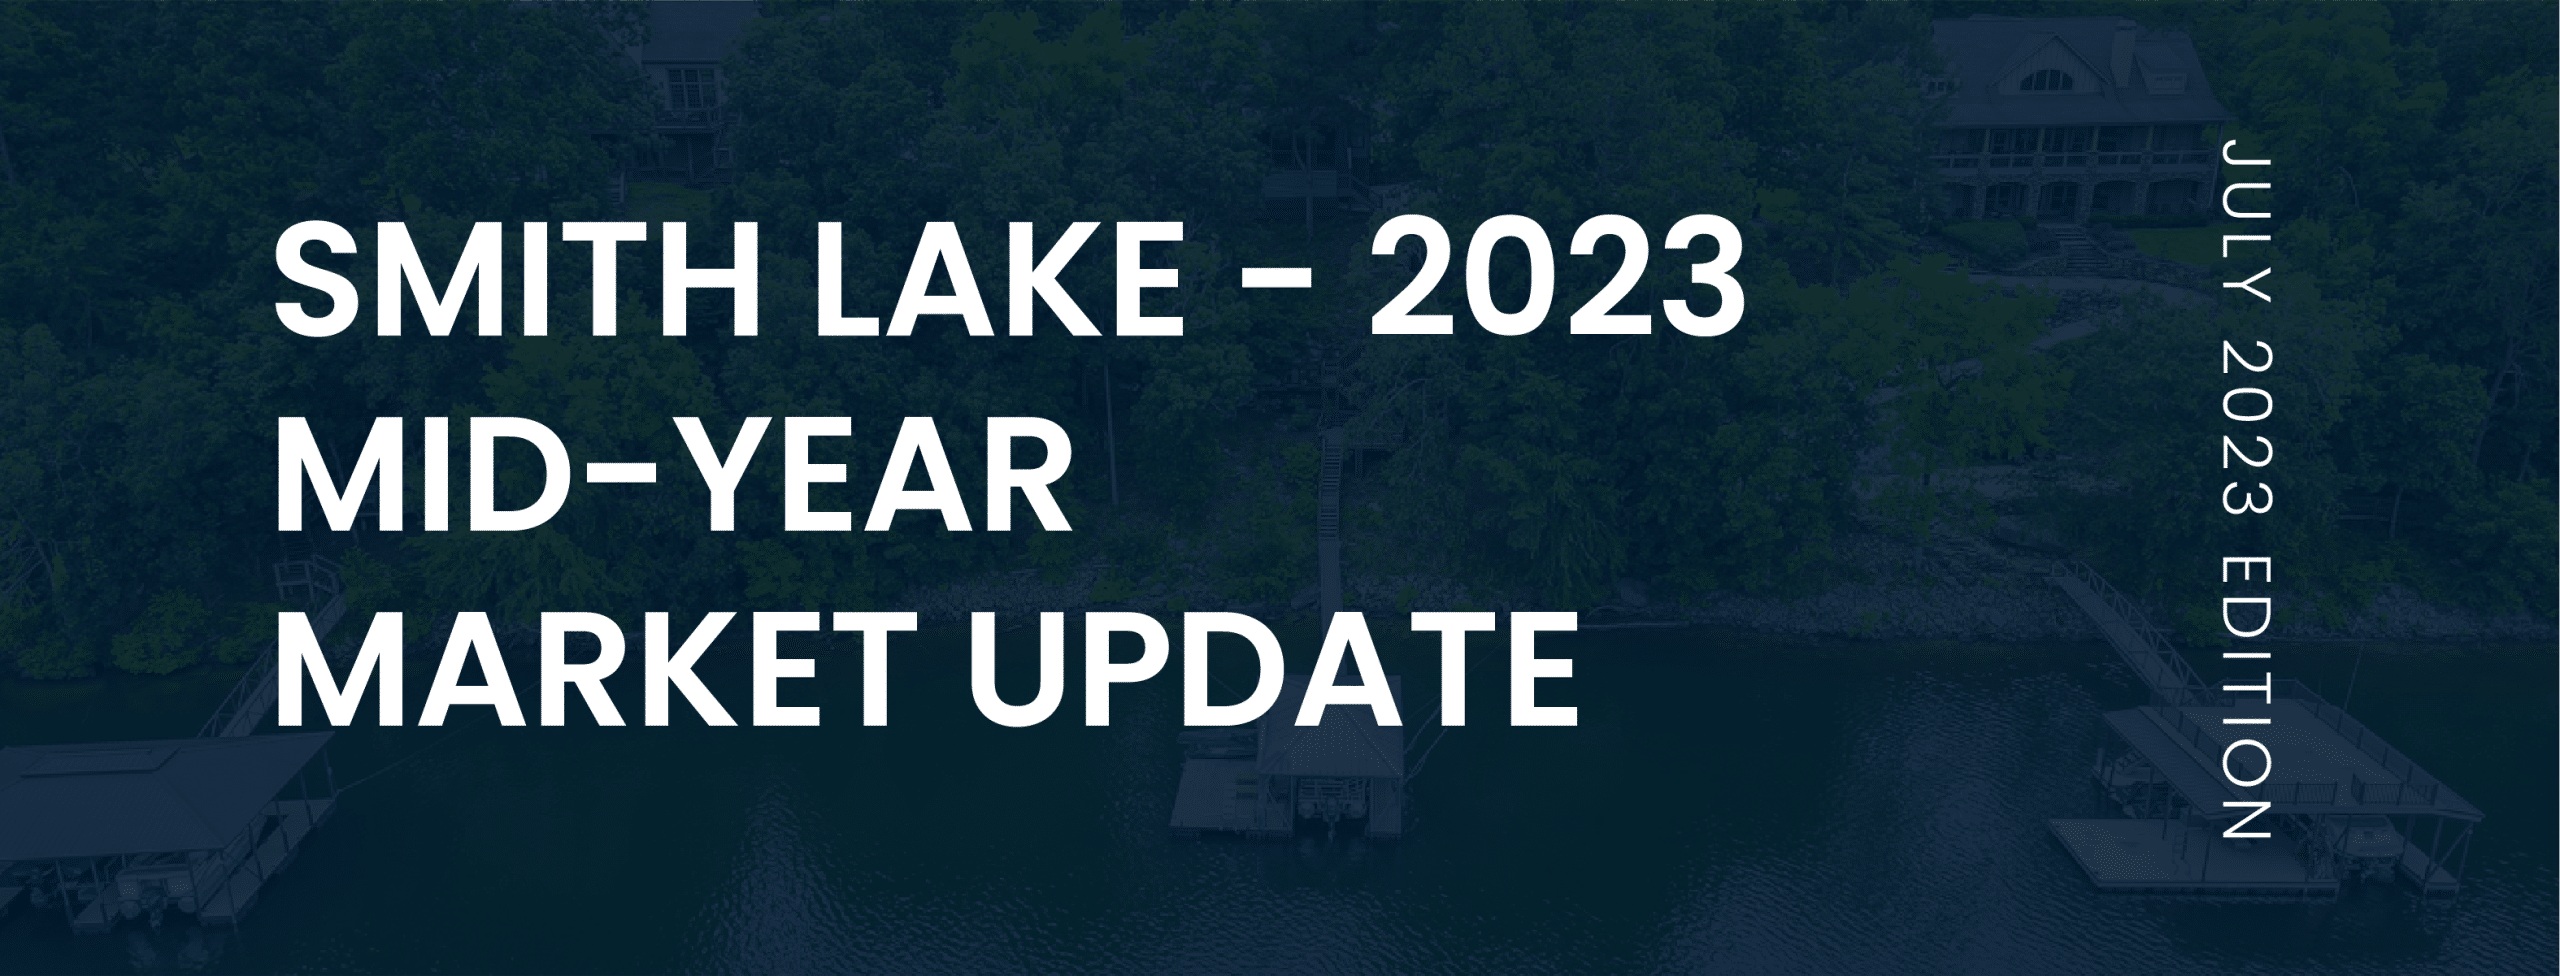 Smith Lake Mid-Year Market Update 2023